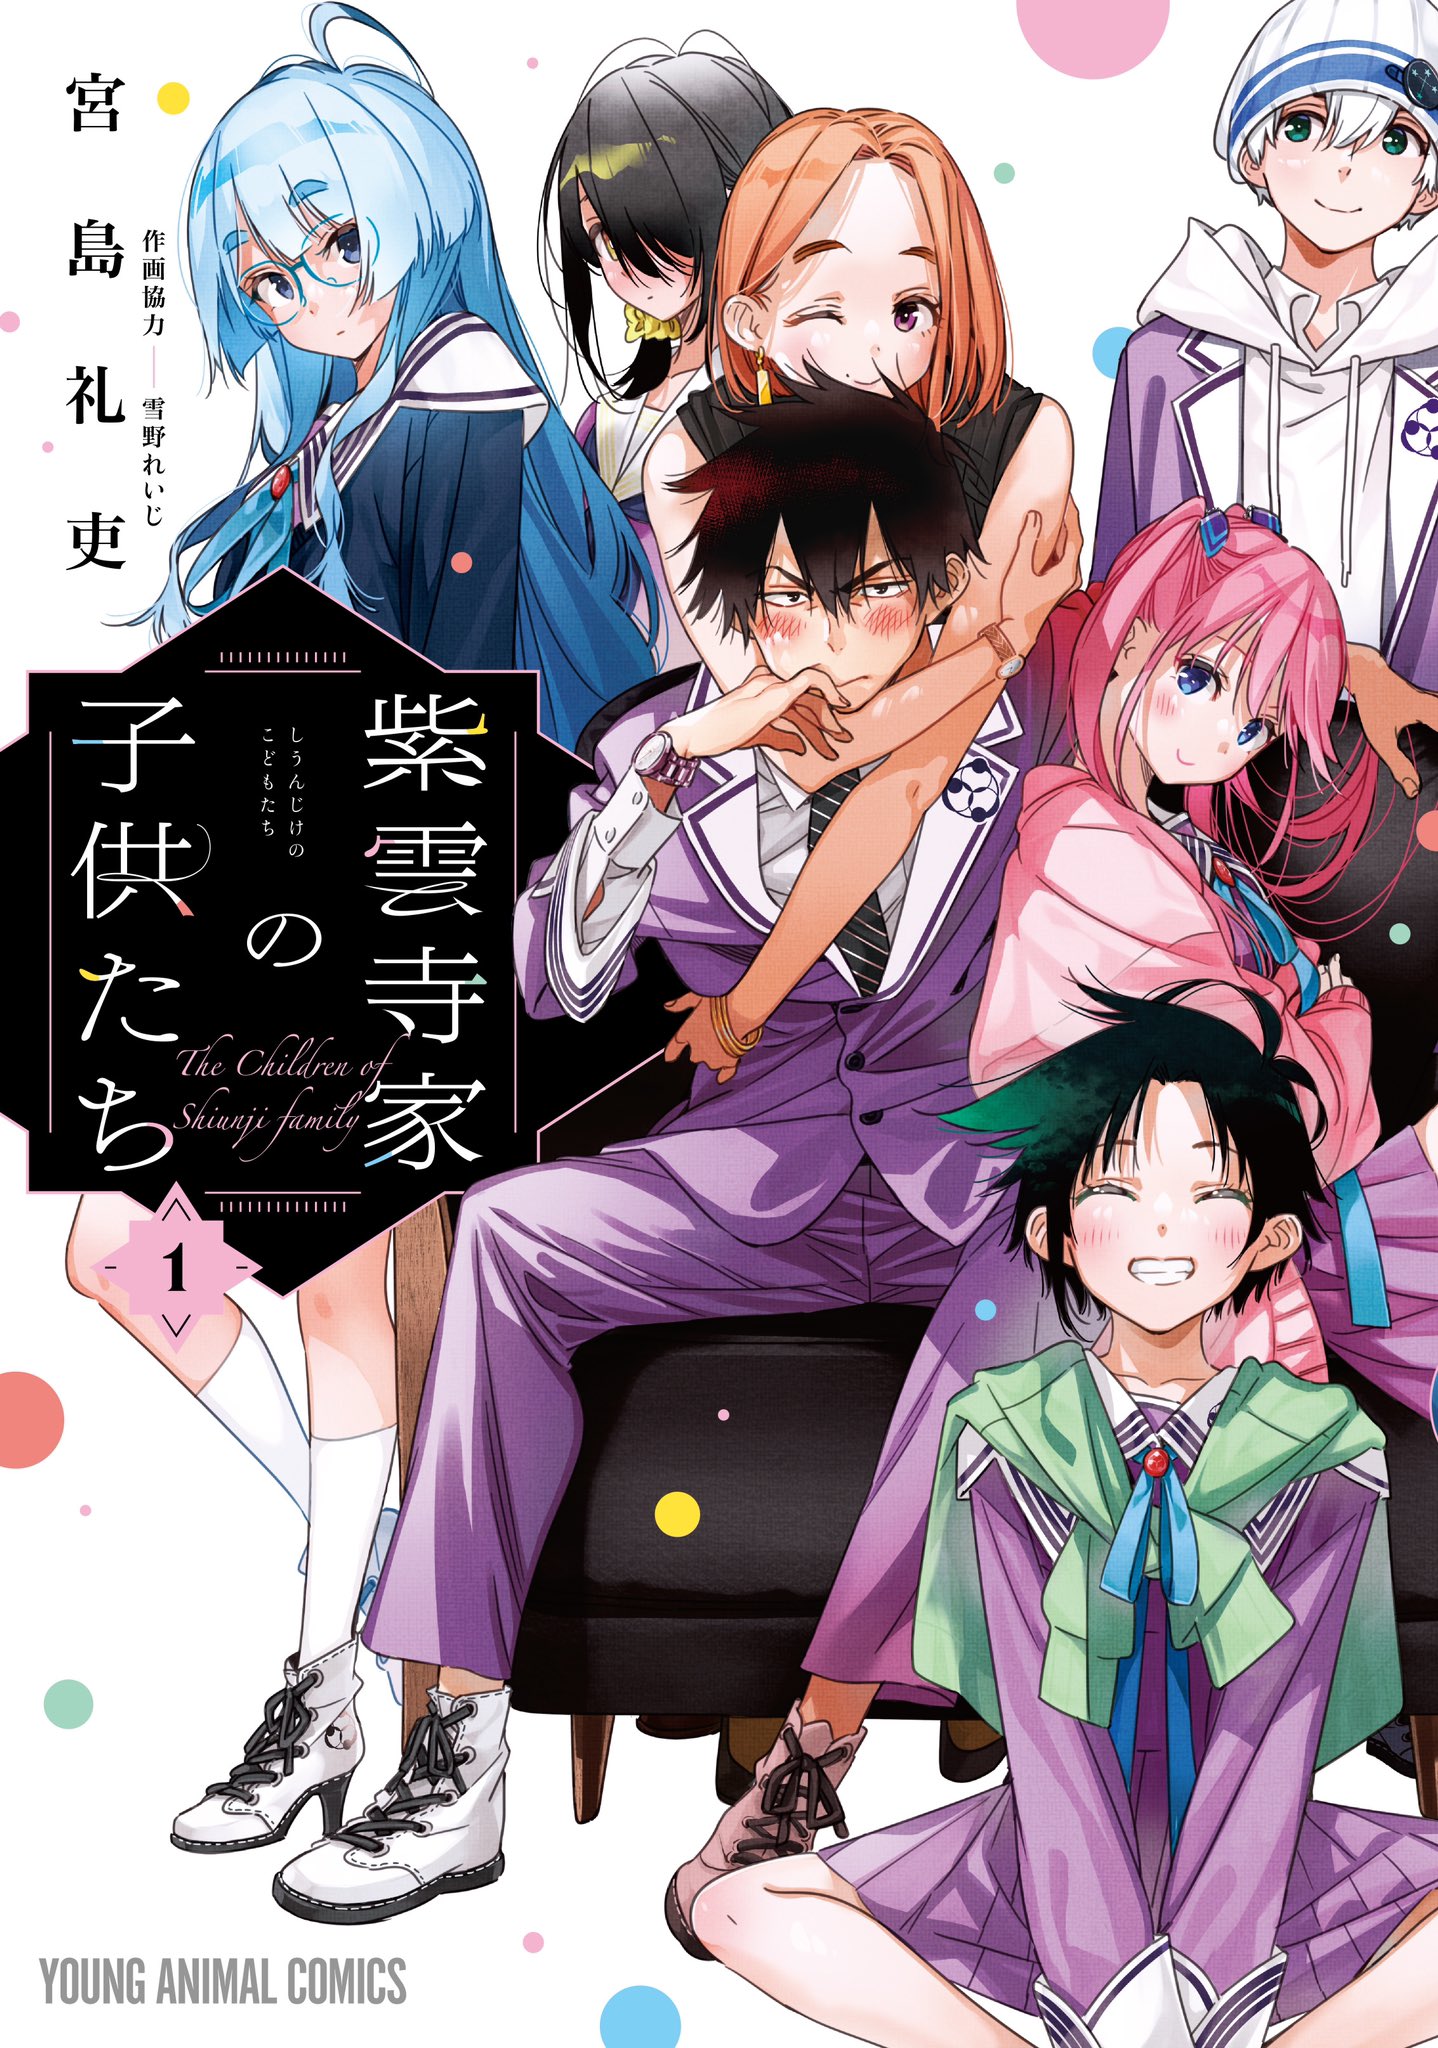 Autor de Reiji Miyajima celebra vendas altas do mangá